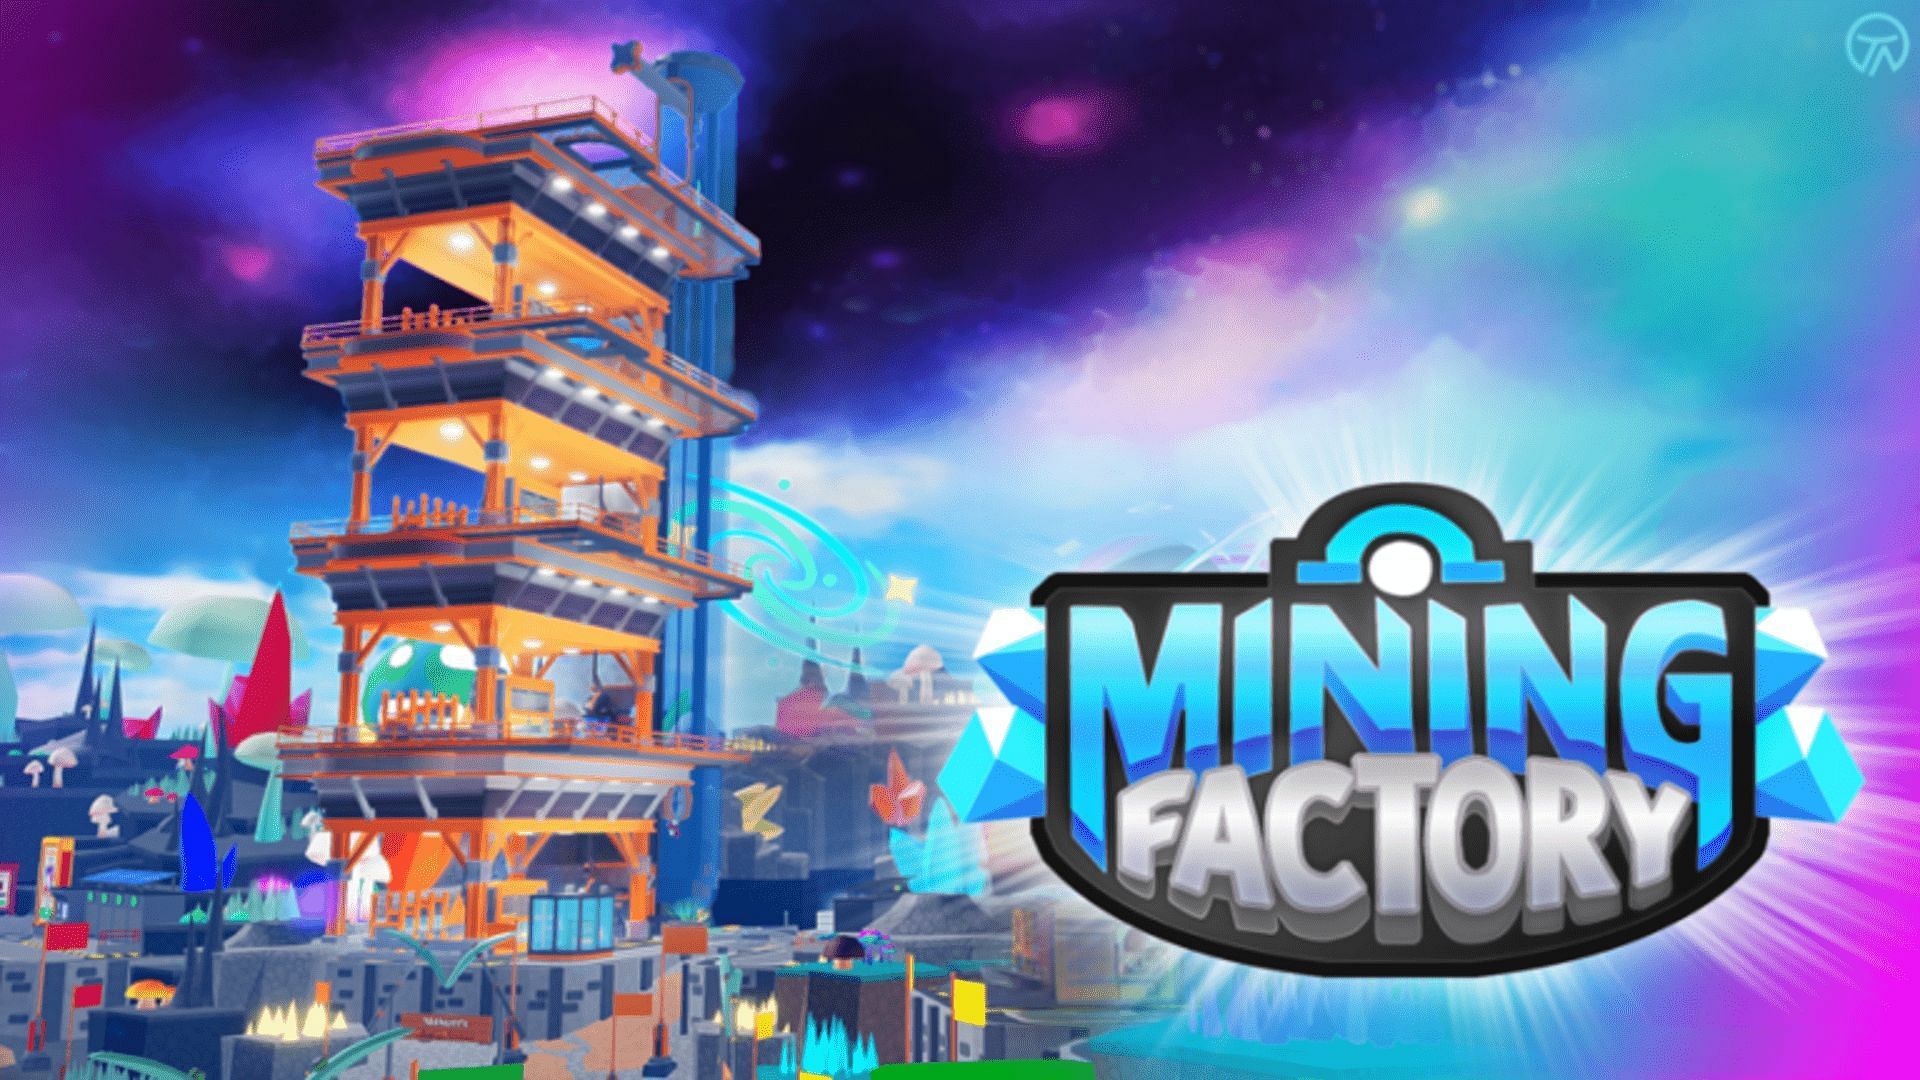 Mining Factory Tycoon